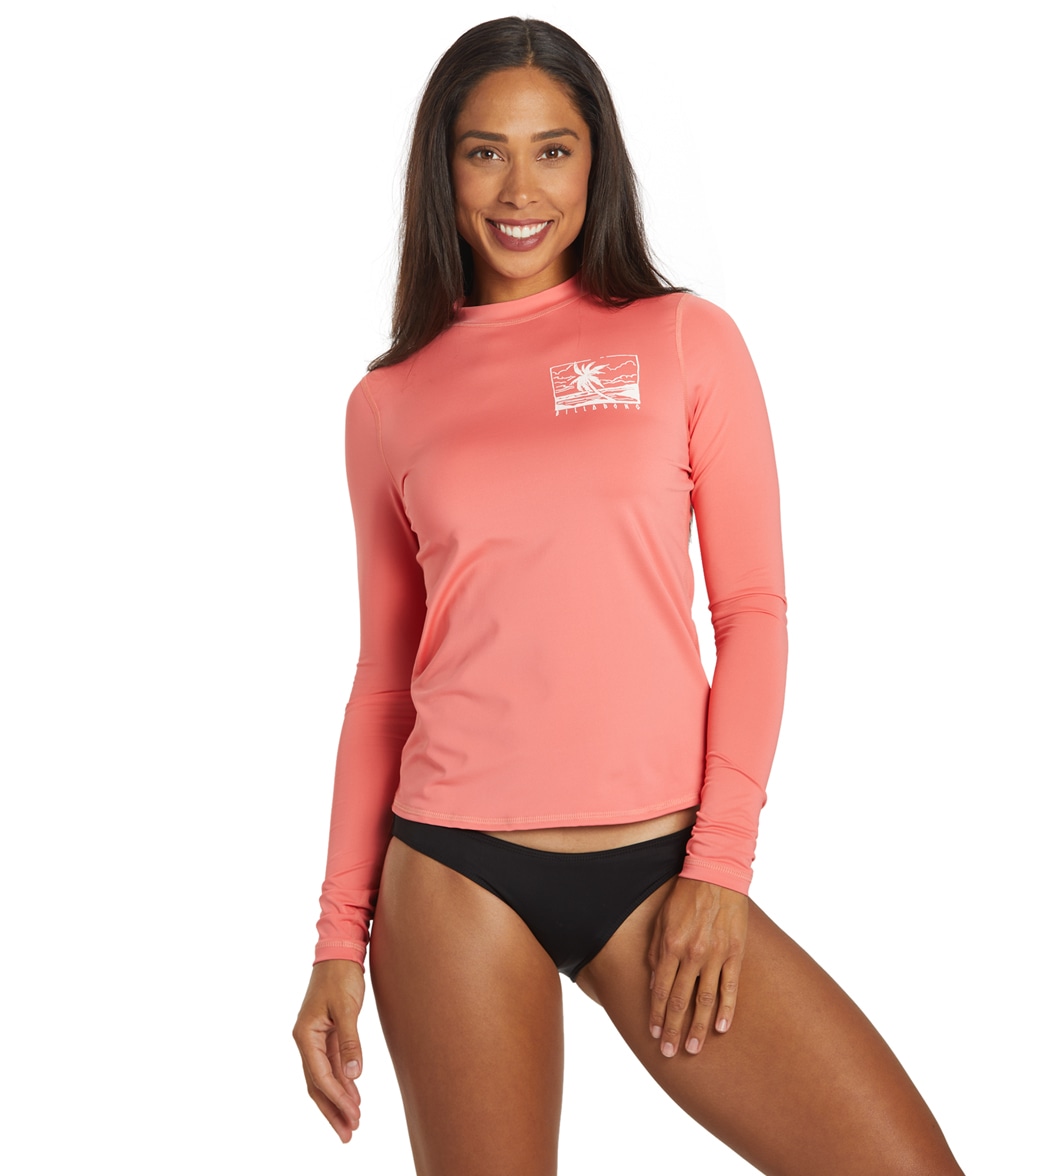 Billabong Women's Core Loose Fit Long Sleeve Upf 50 Surf Shirt - Vintage Coral Large/12 - Swimoutlet.com